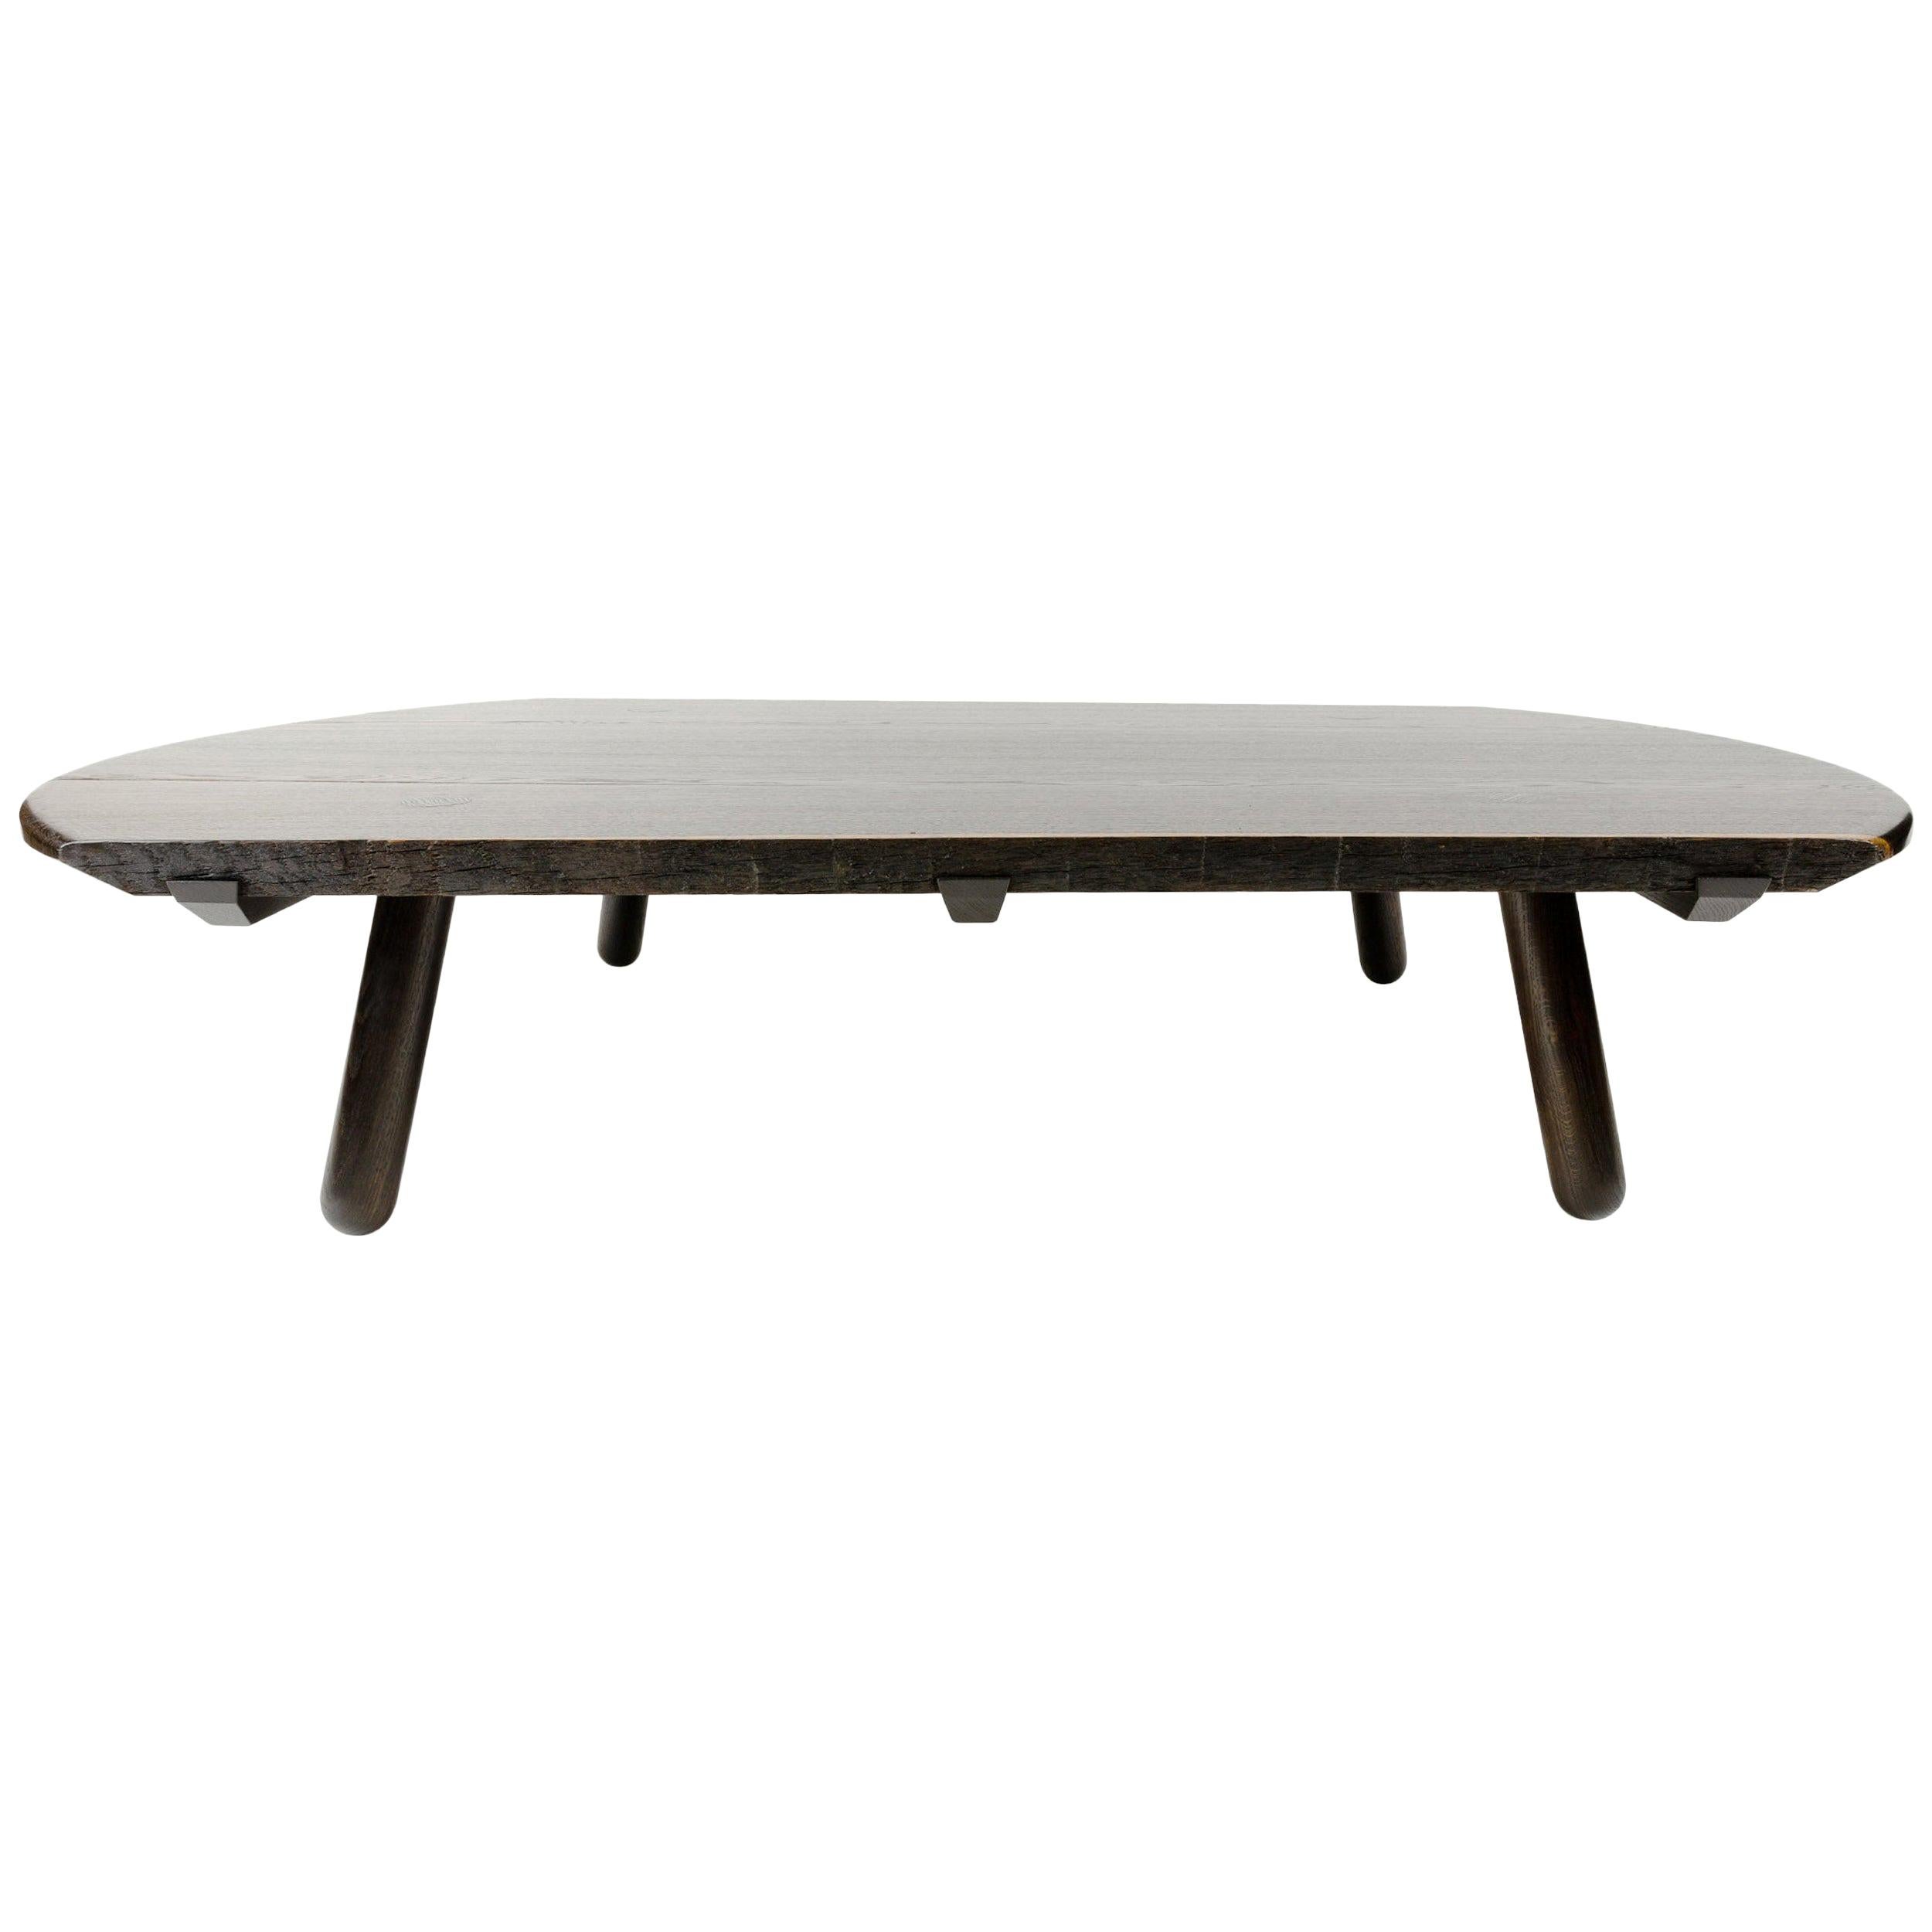 Wyeth Original Sliding Dovetail Low Table in Fumed Oak